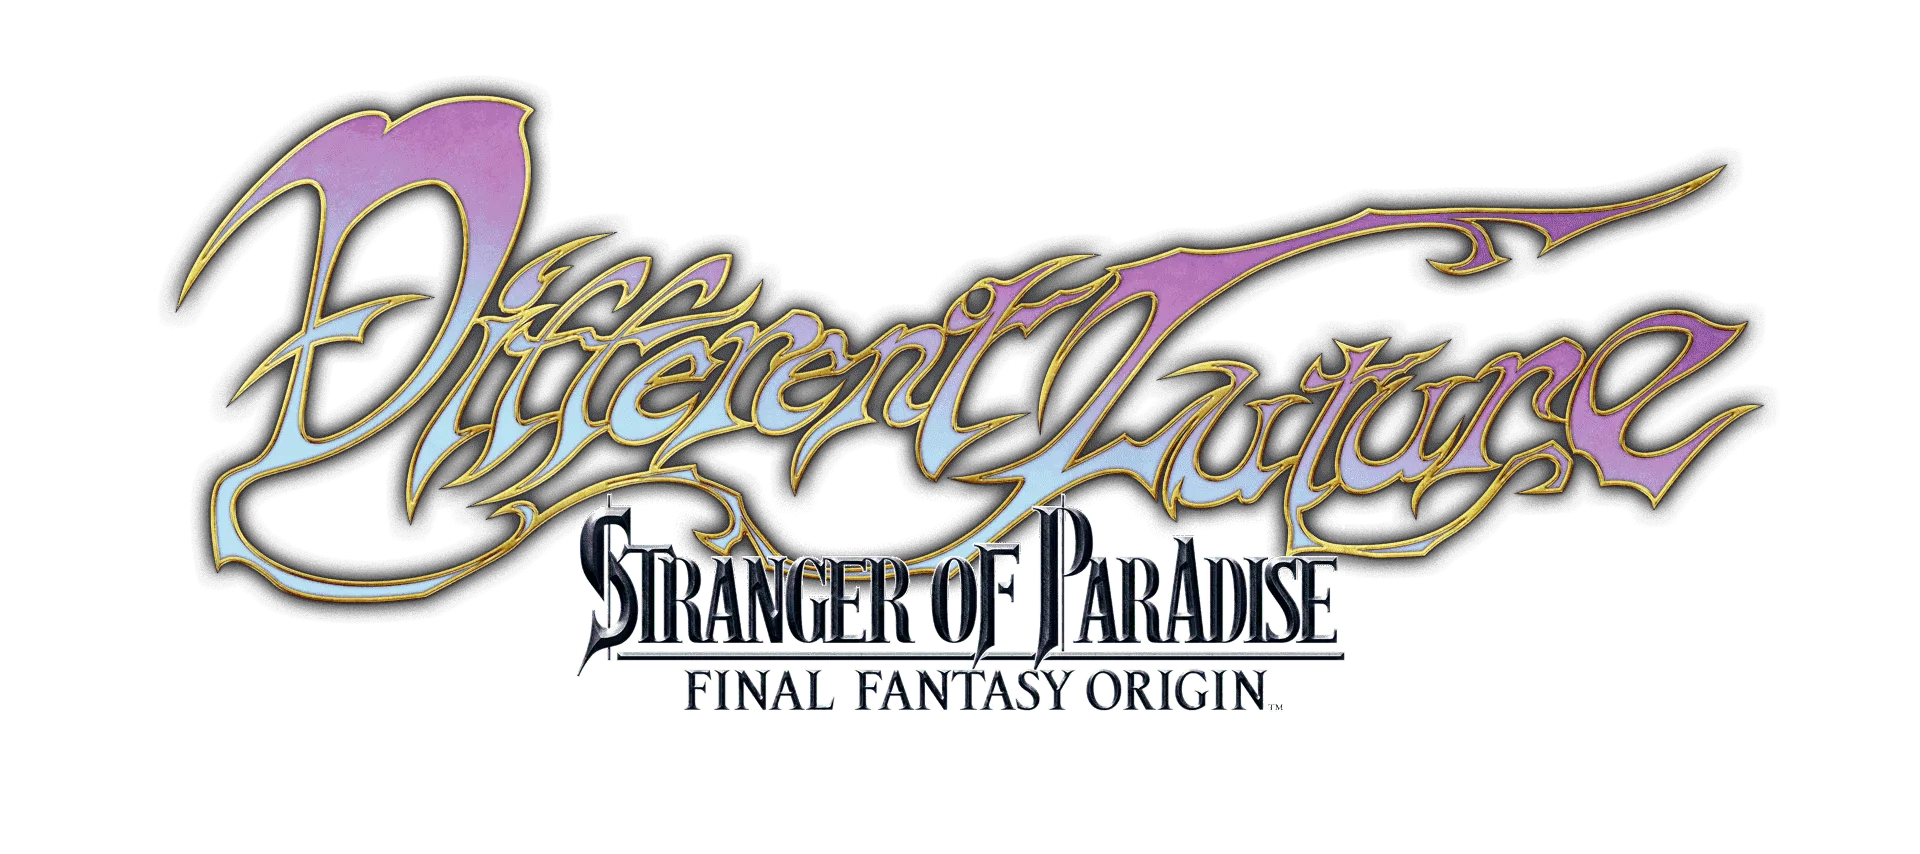 『STRANGER OF PARADISE FINAL FANTASY ORIGIN』 追加任務第三彈「DIFFERENT FUTURE」公開發佈日期